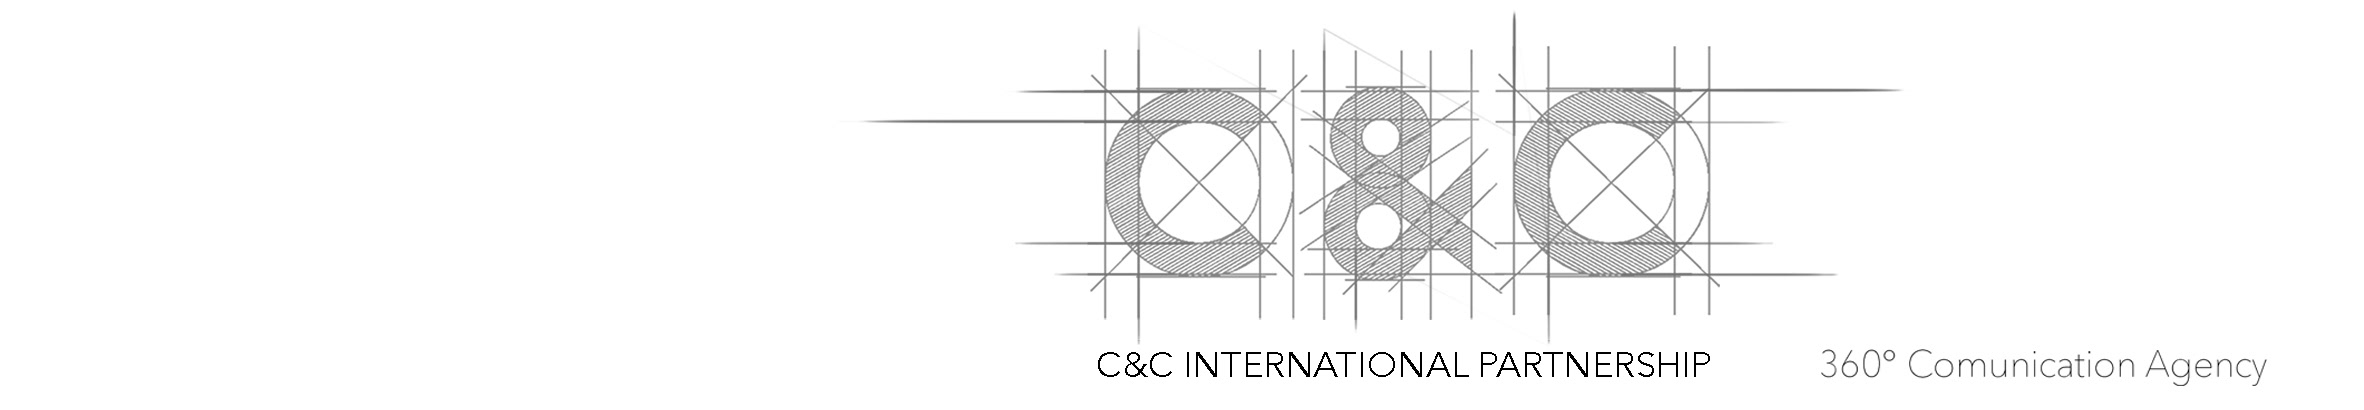 C&C International Partnership's profile banner